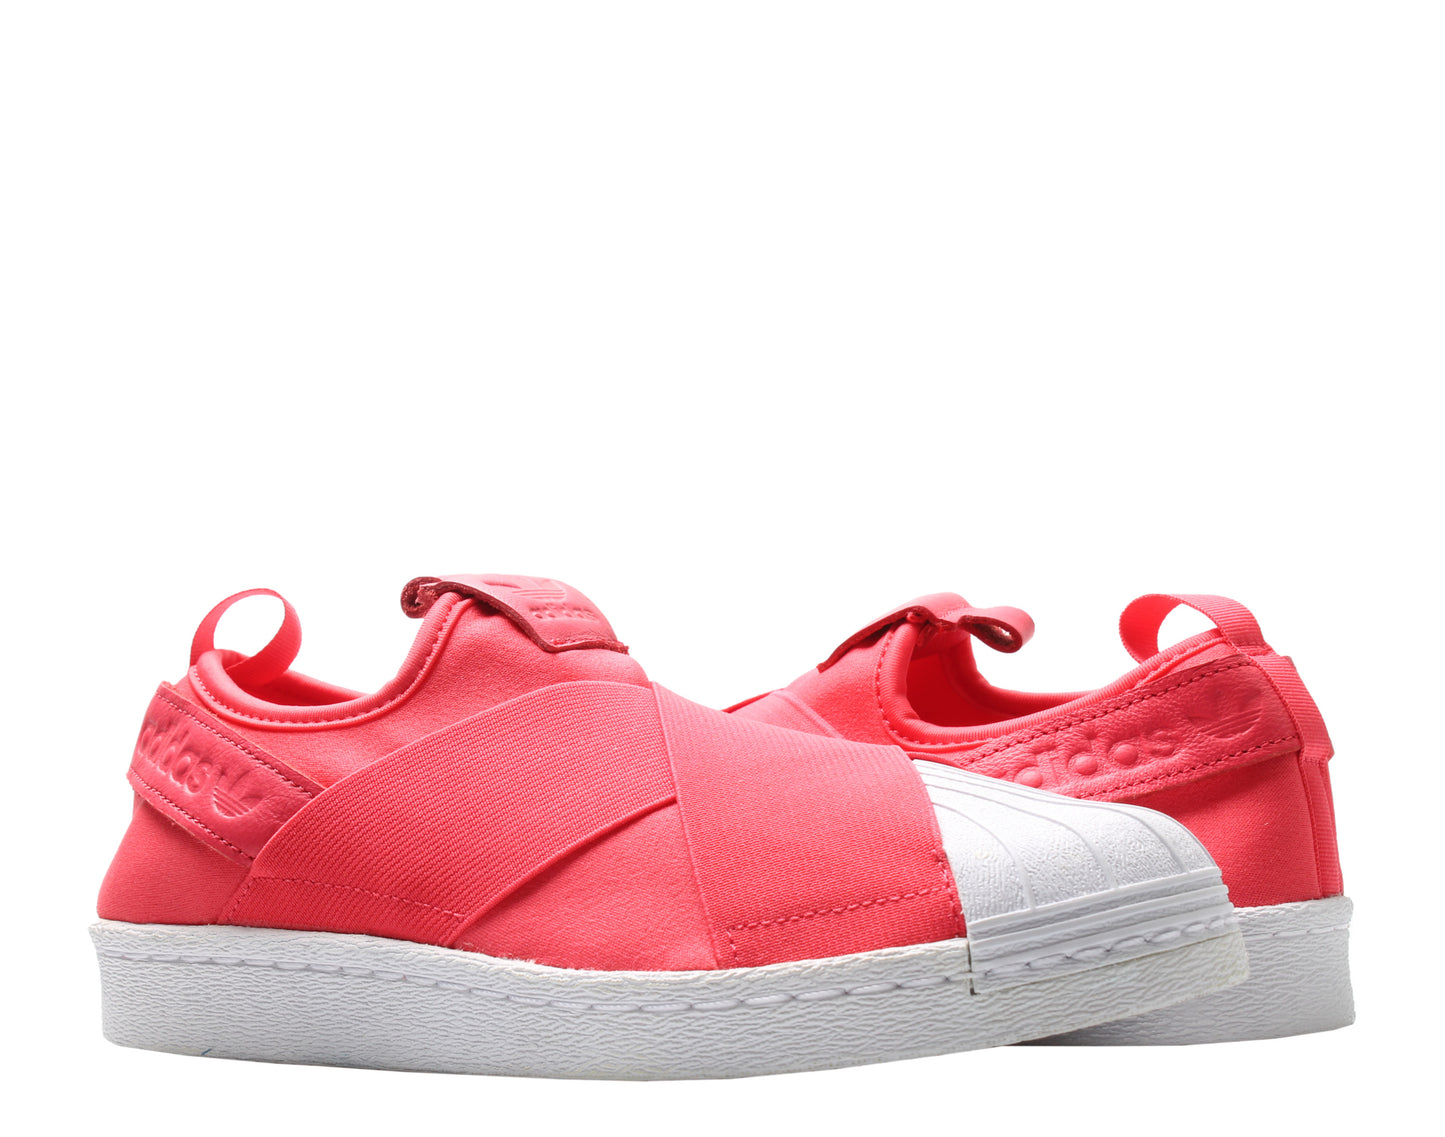 Adidas Superstar Slip-On Women's Casula Shoes